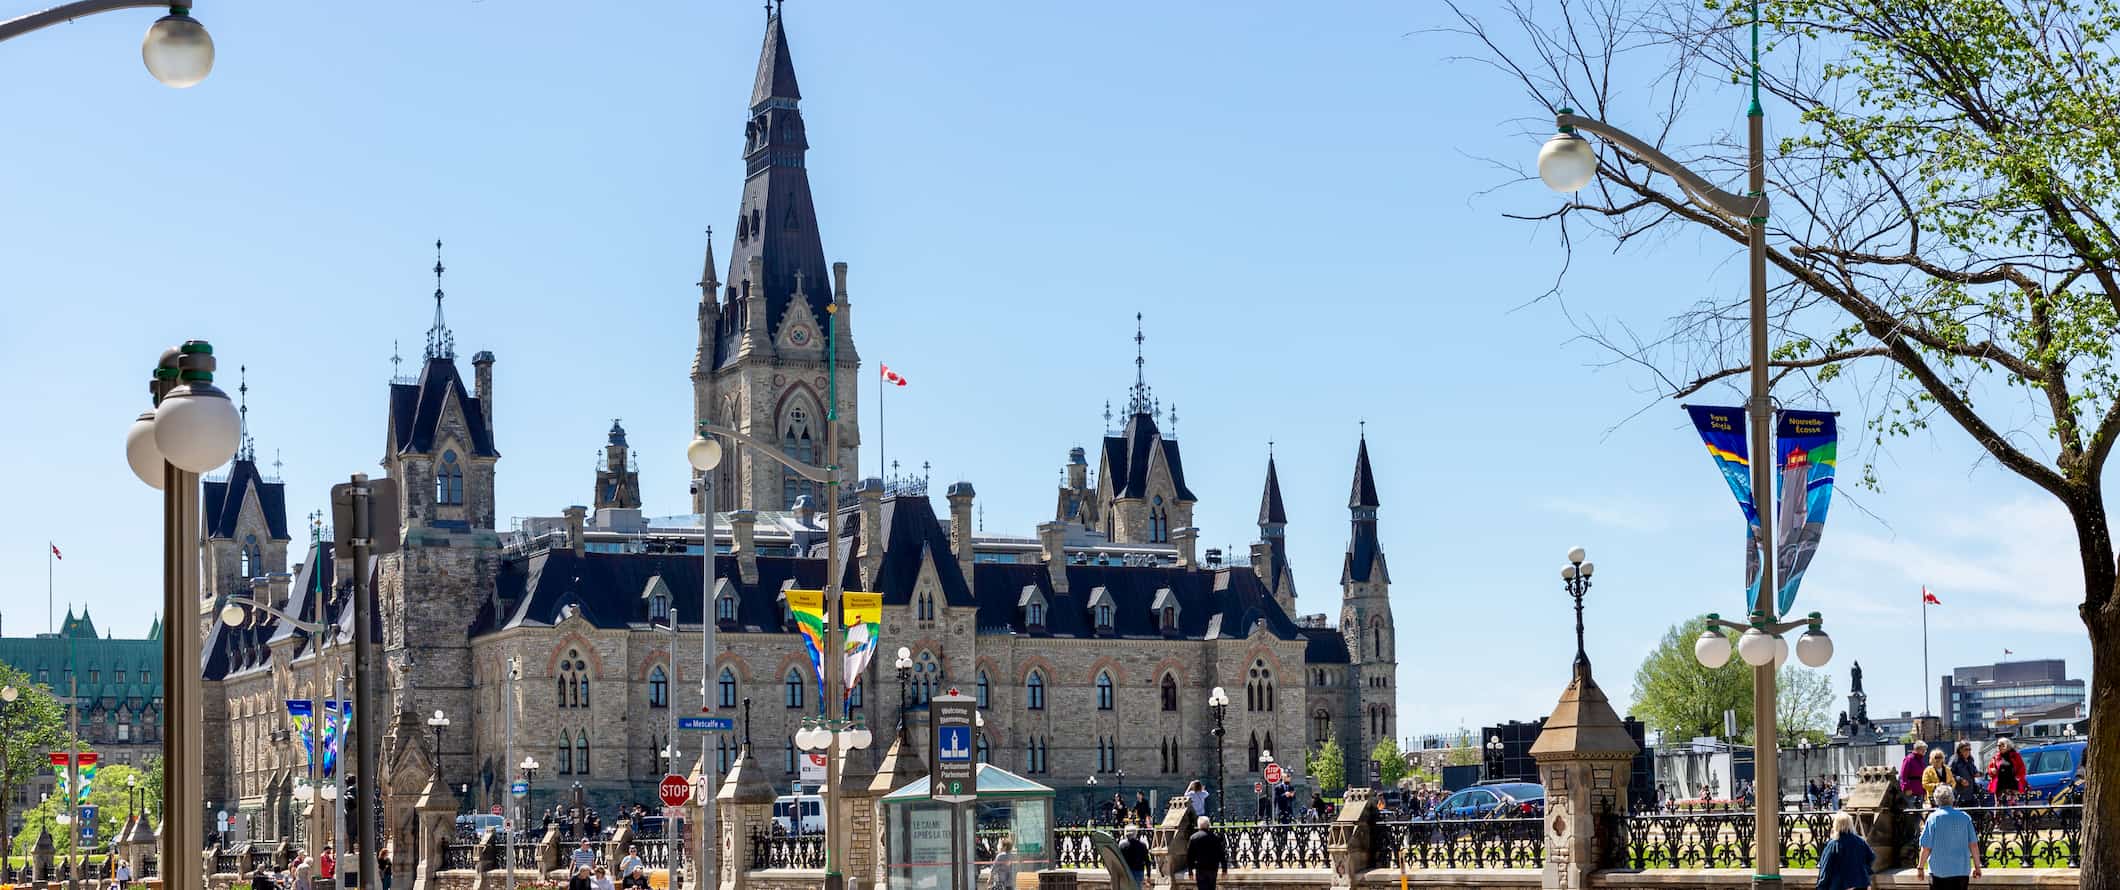 The iconic Parliament Hill in sunny Ottawa, Canada